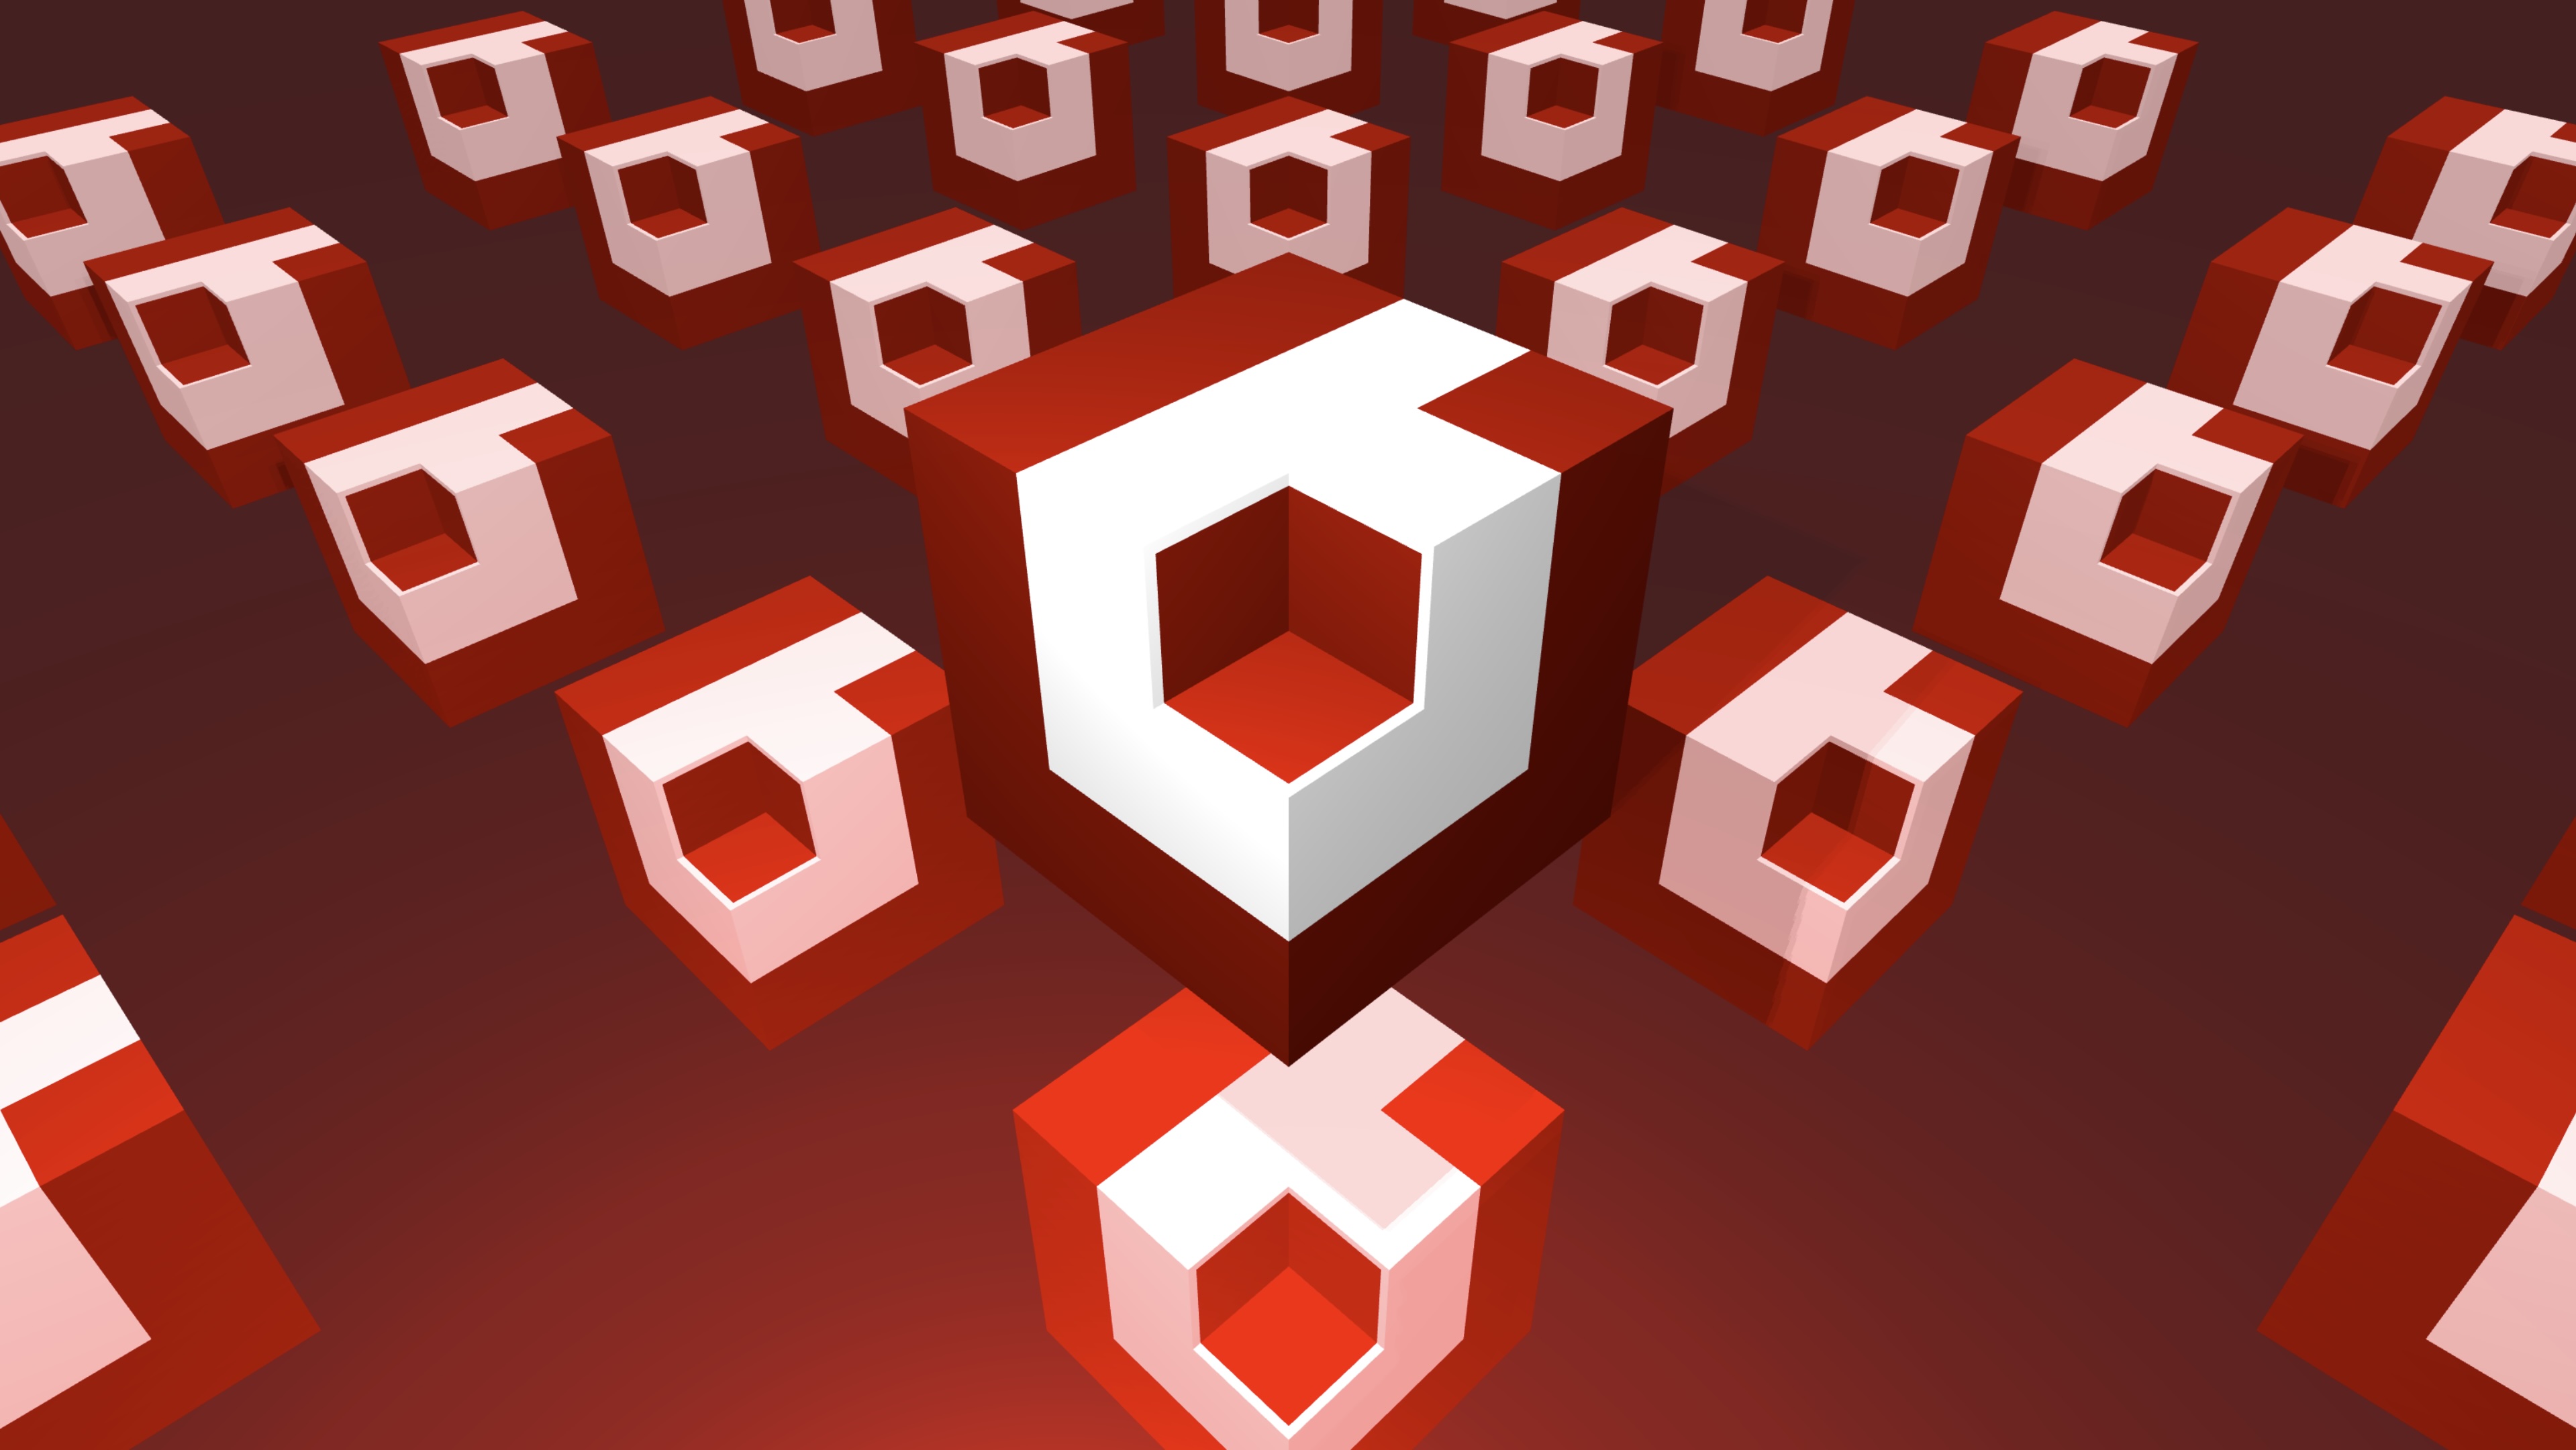 Image showing BabylonJS logo designed in 3D using TypeScript programming language